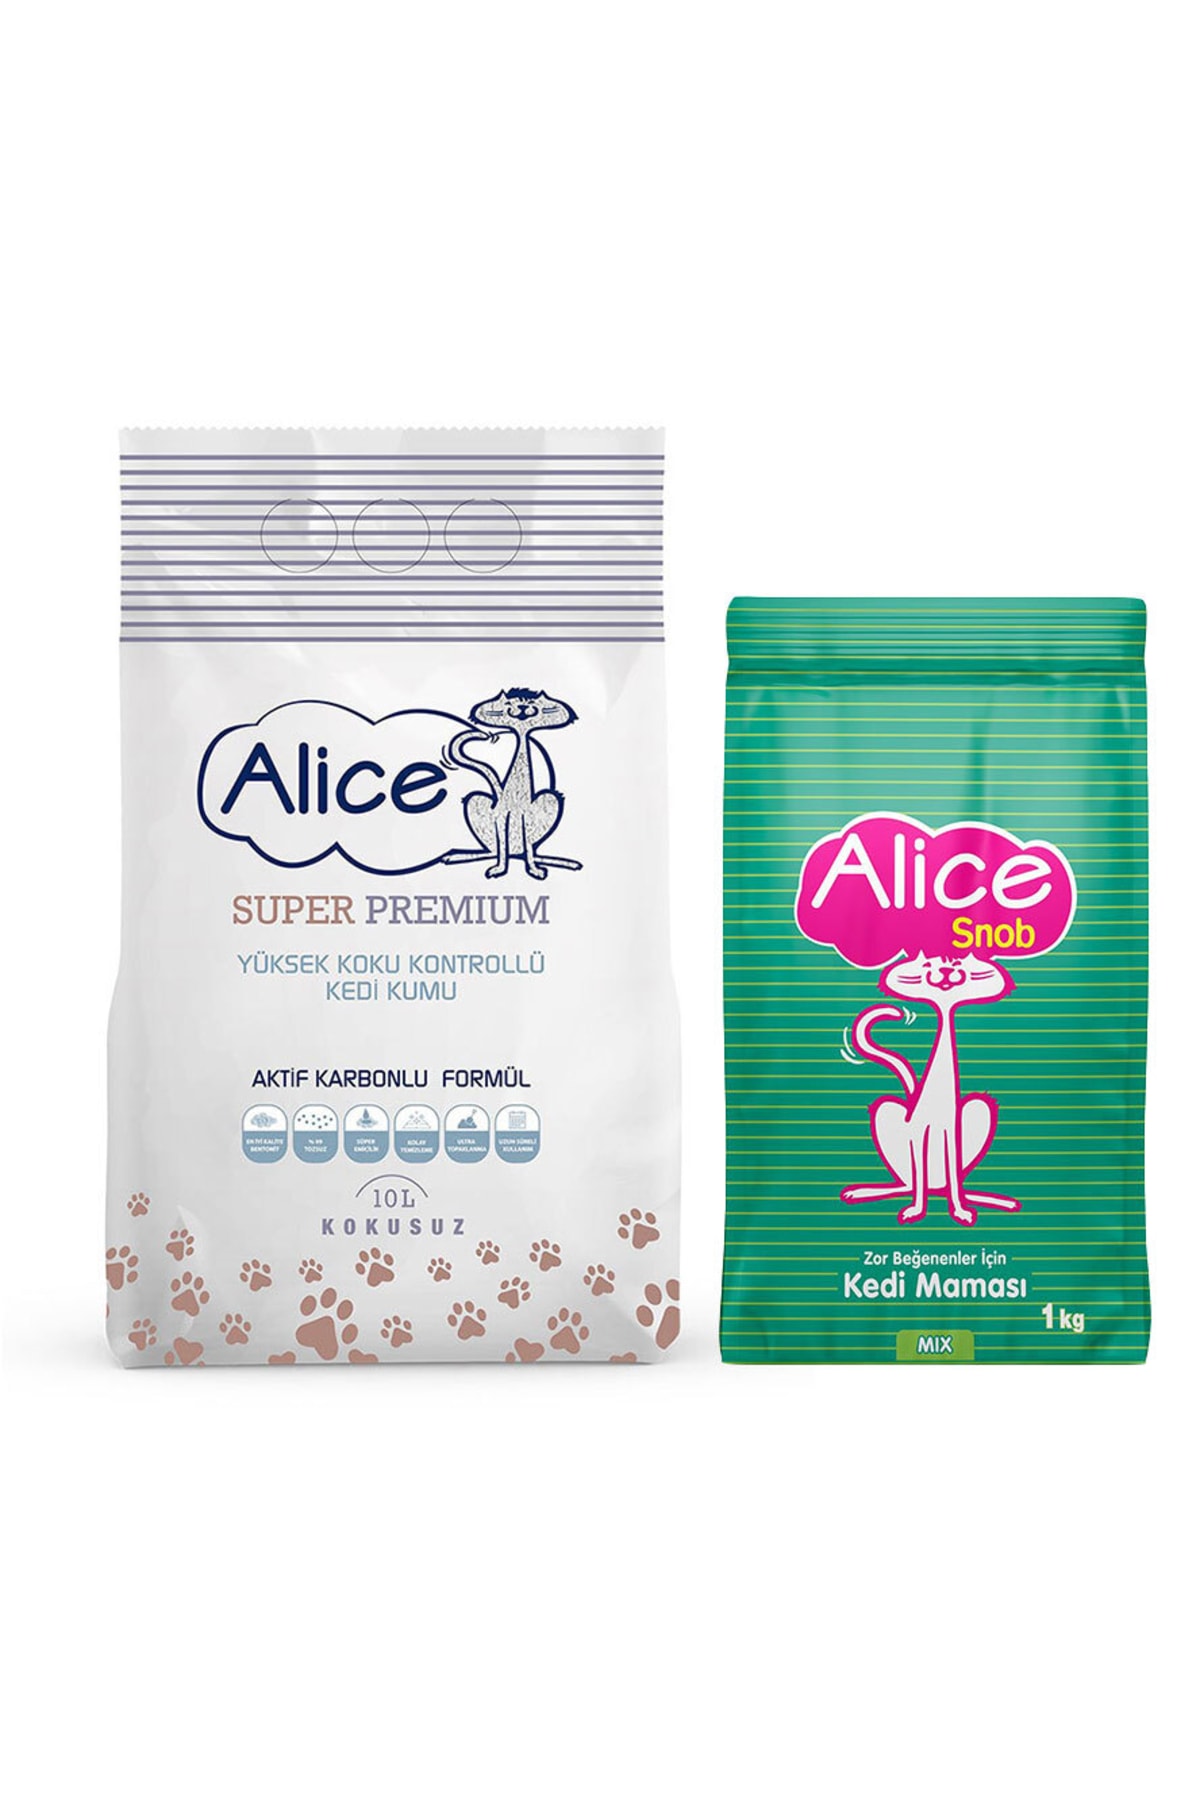 Alice Aktif Karbonlu Super Premium Kedi Kumu 10 Lt Ve Snob Kedi Maması 1 Kg